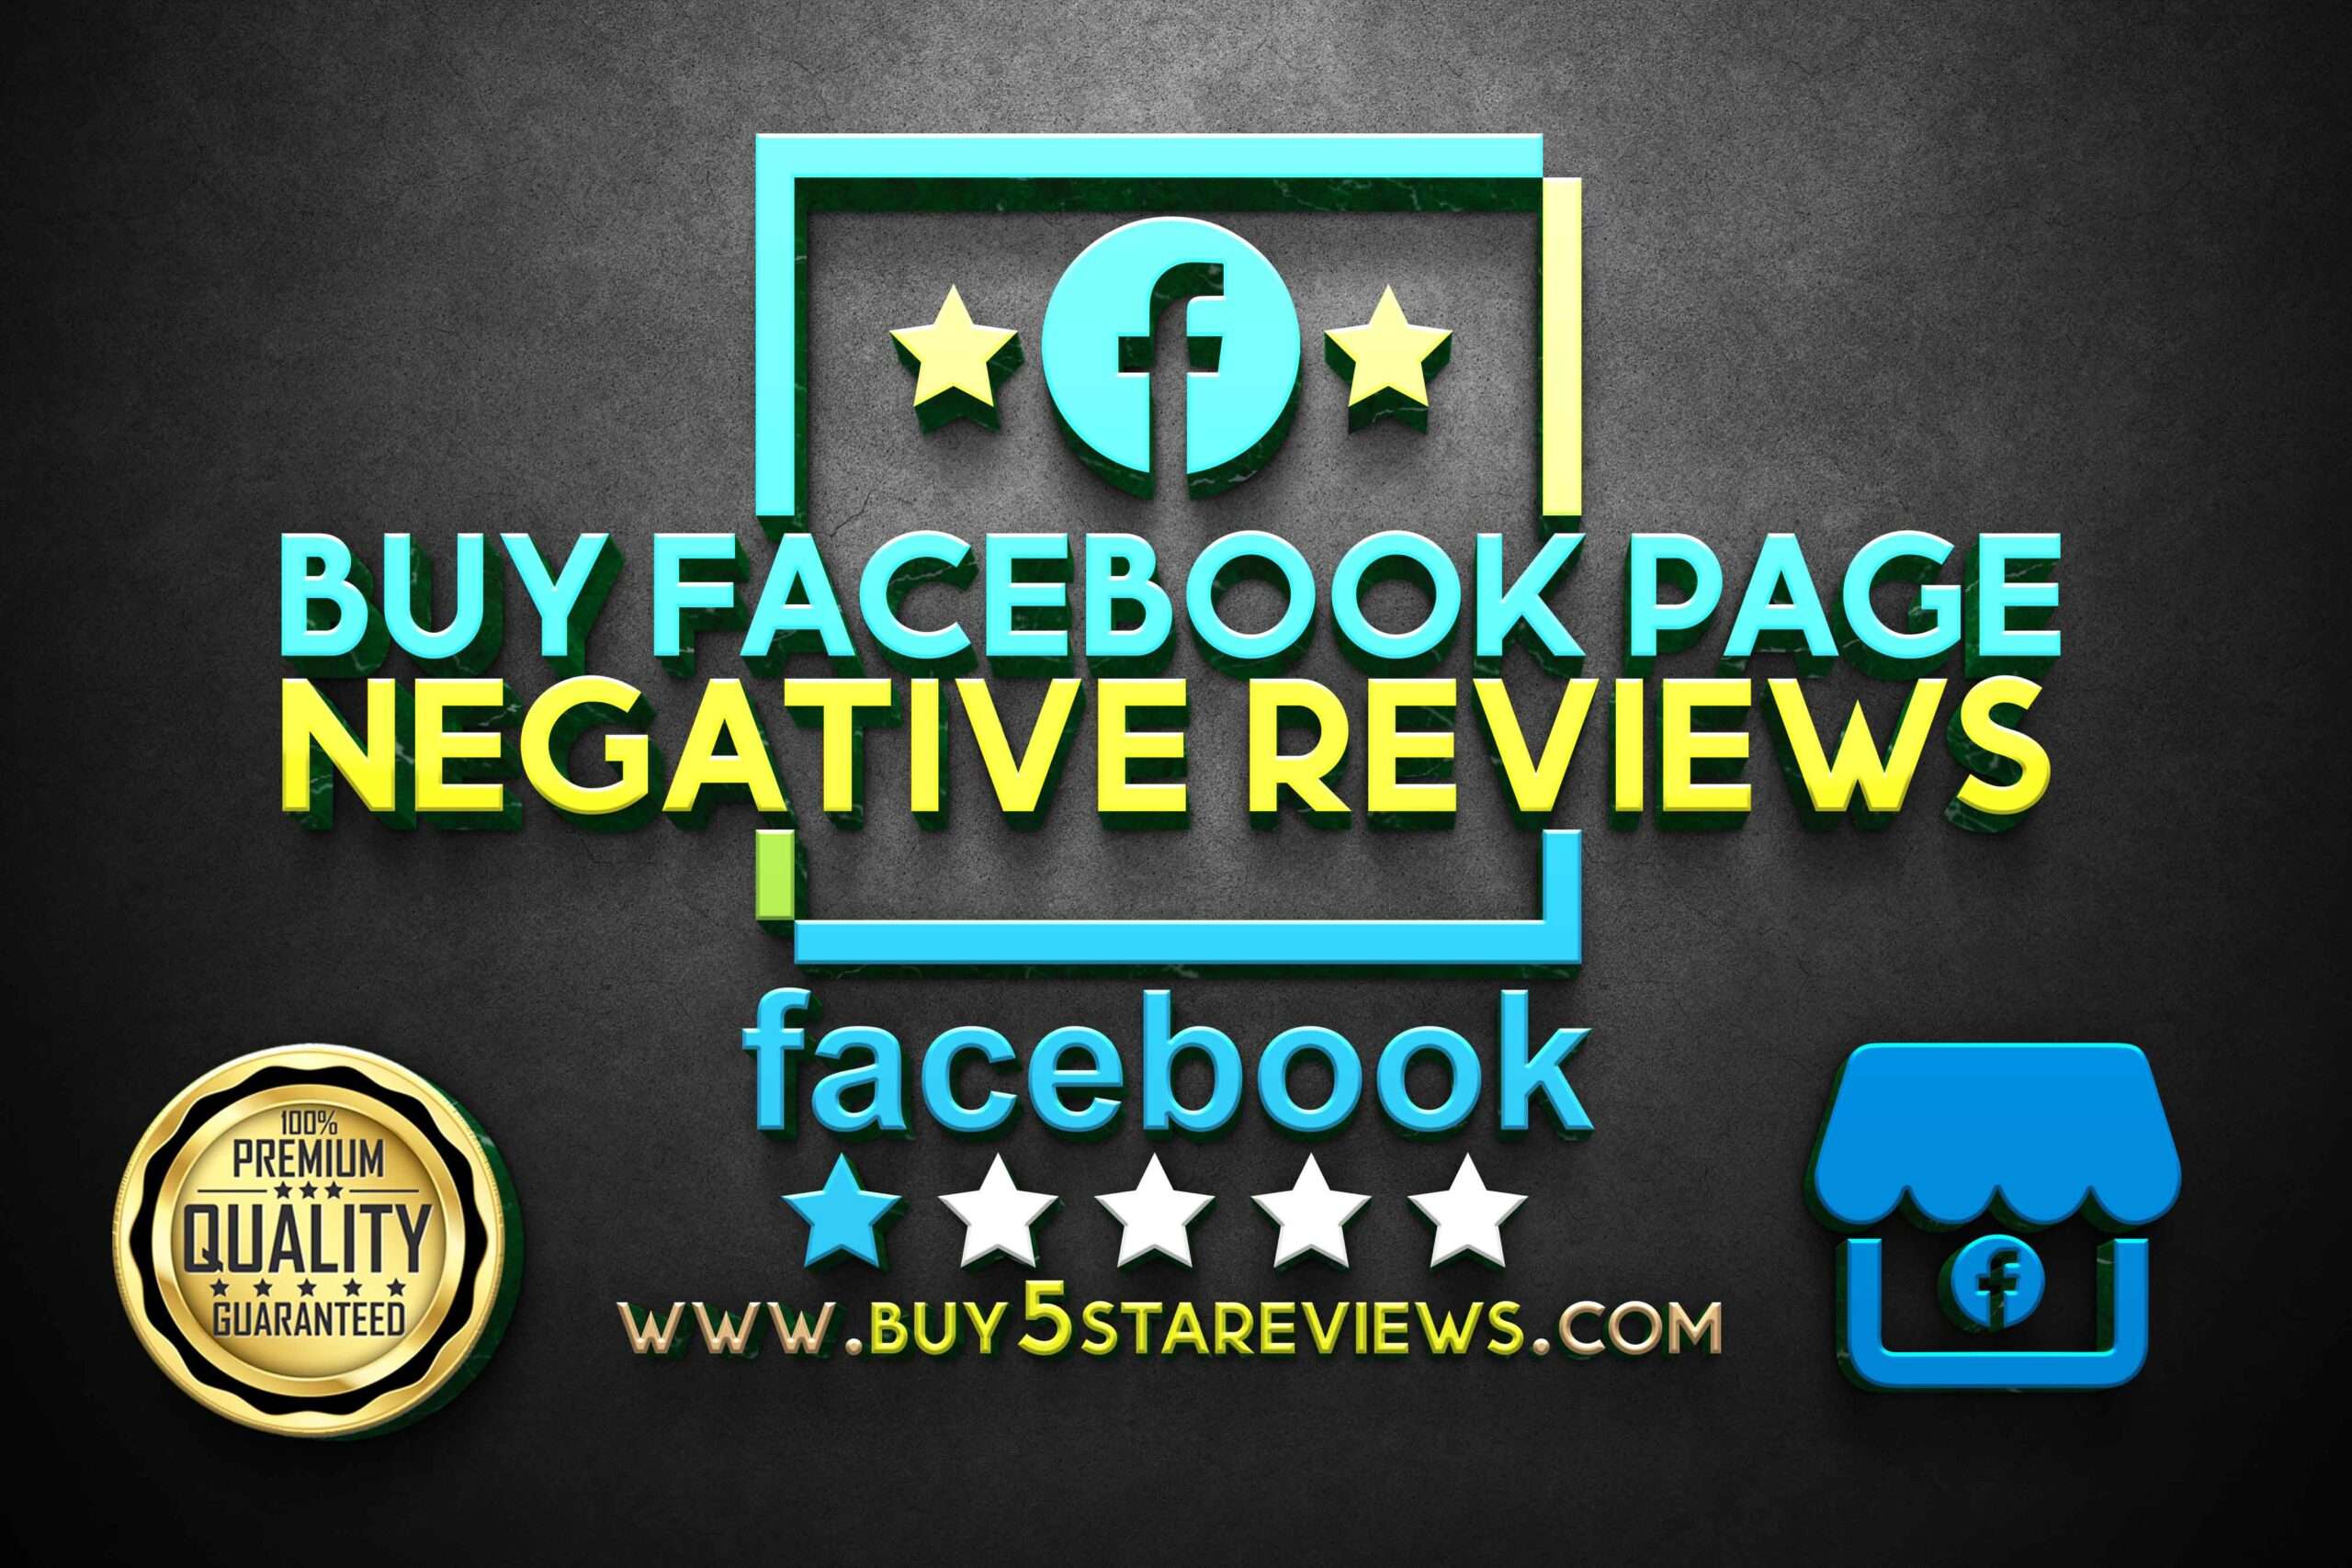 Buy Facebook Page Negative Reviews